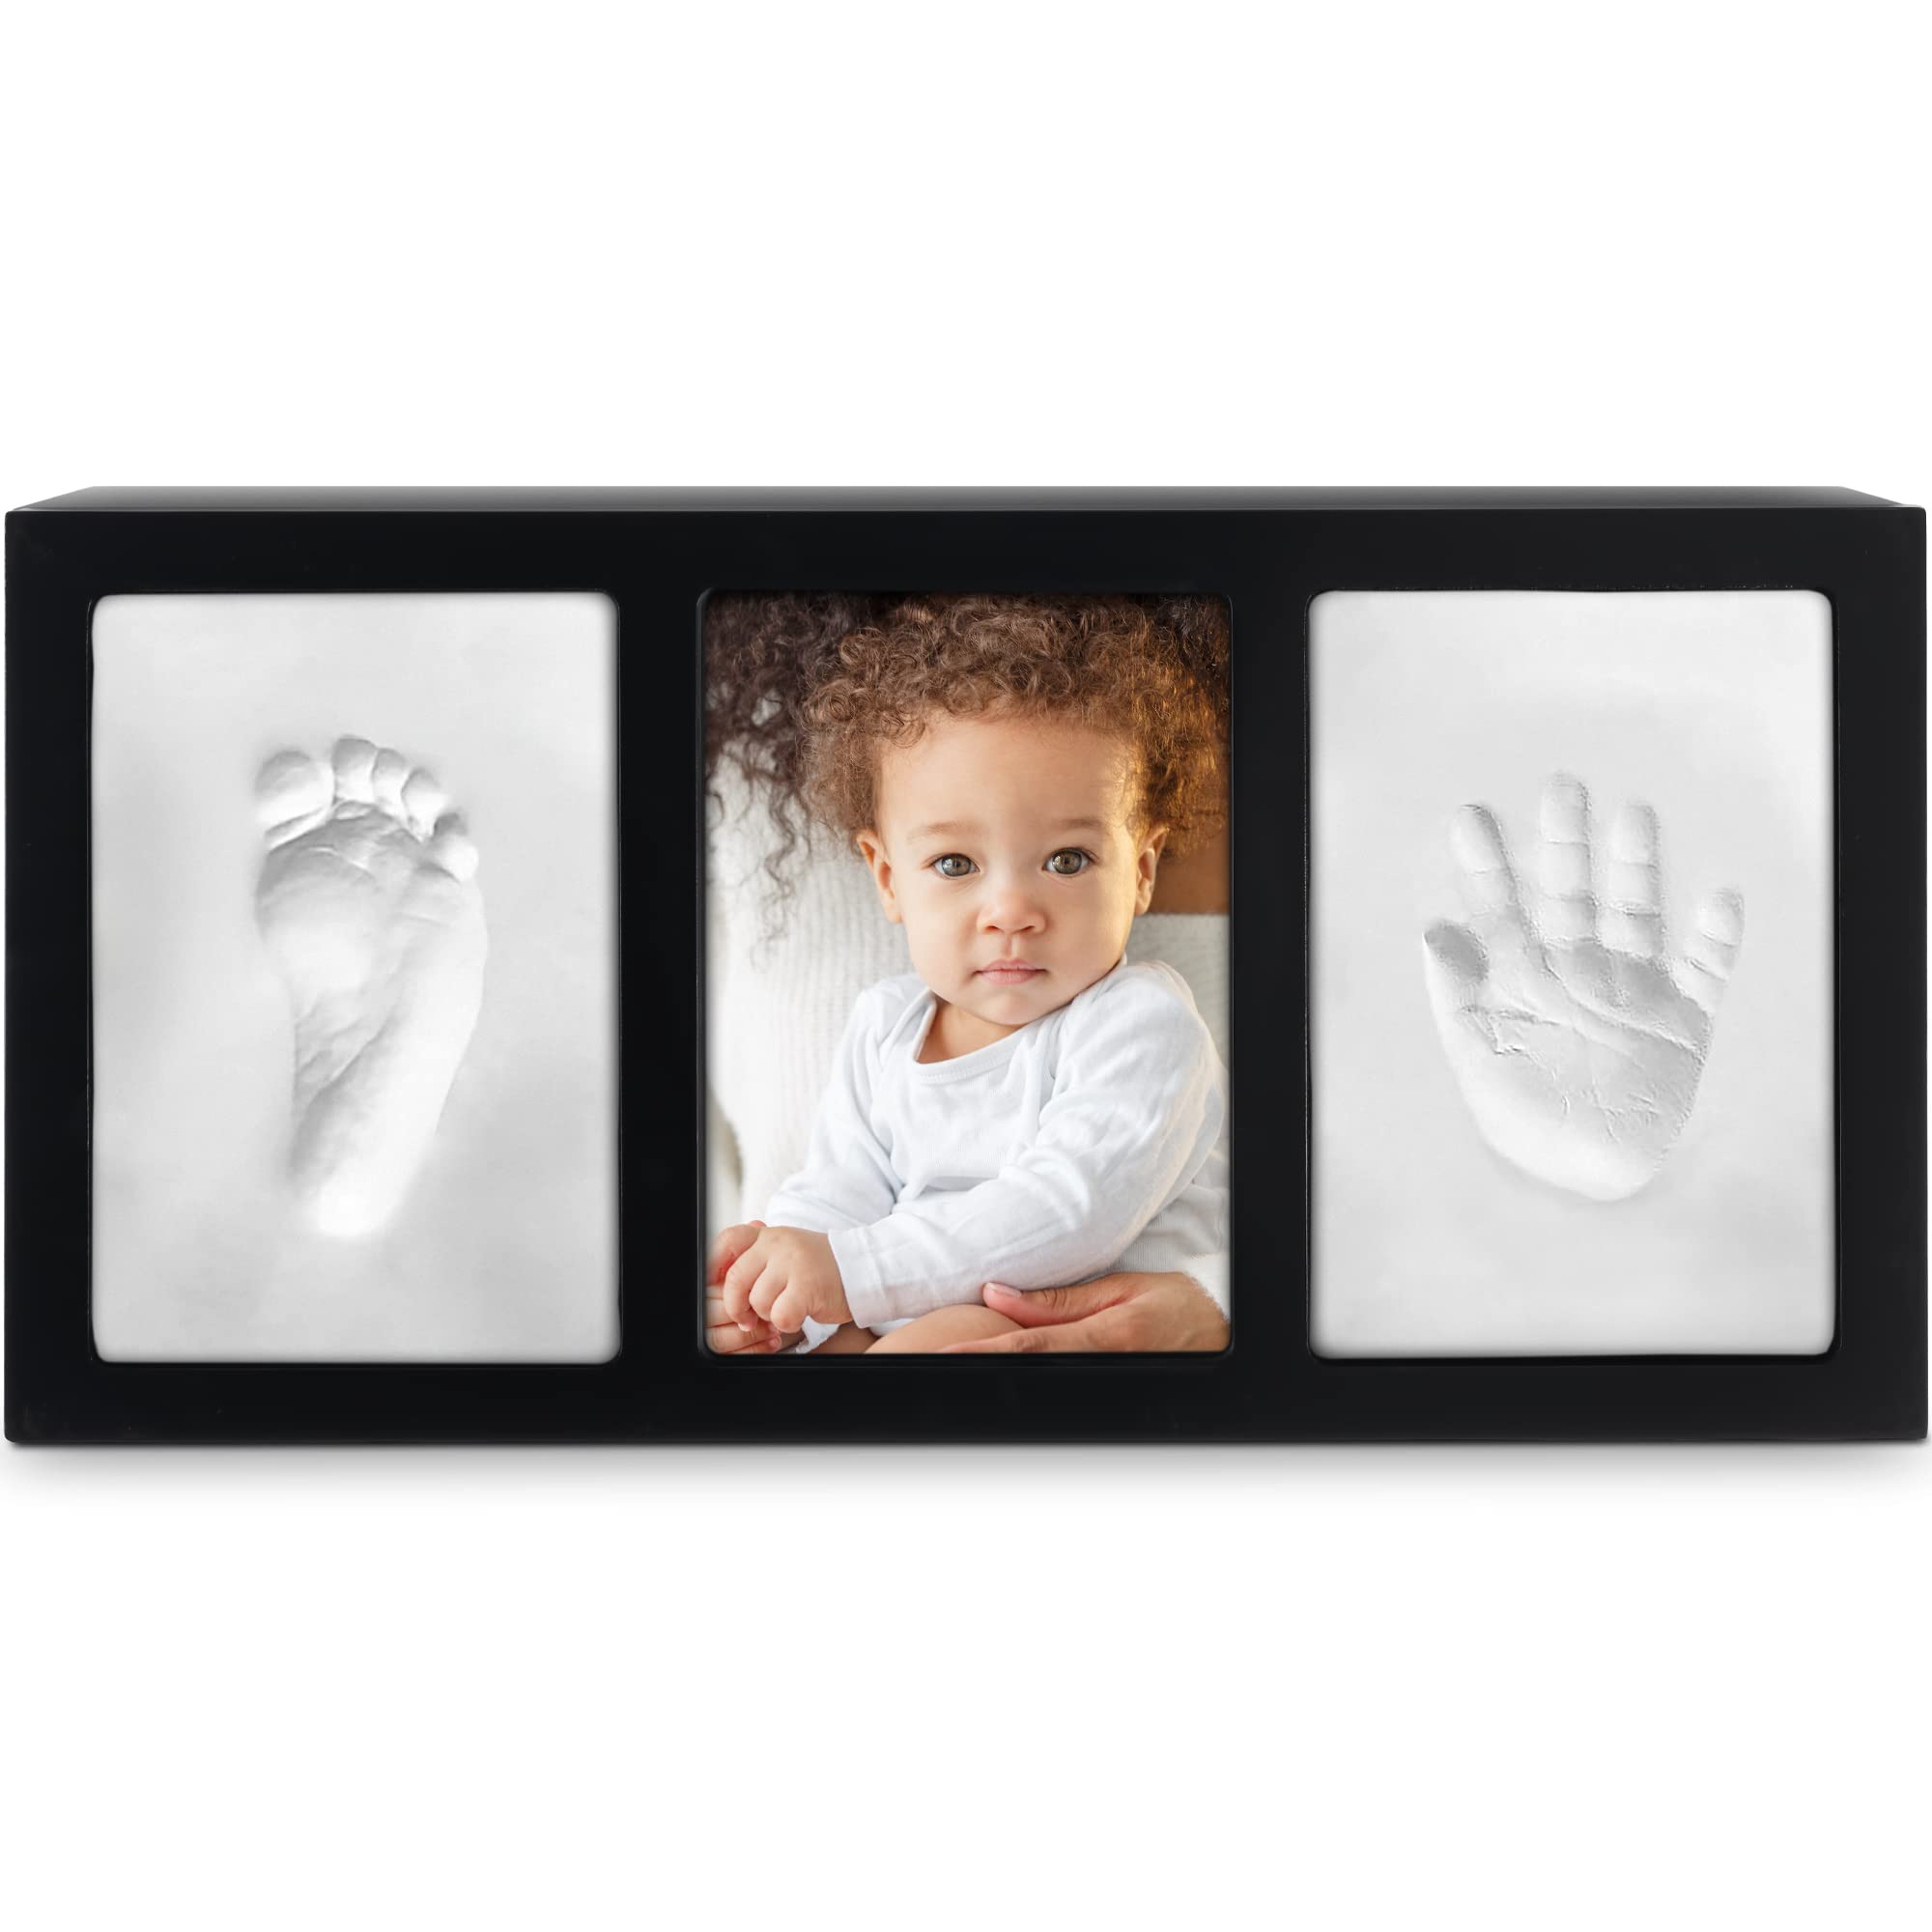 Baby Handprint and Footprint Kit,Baby Foot and Handprint Kit for